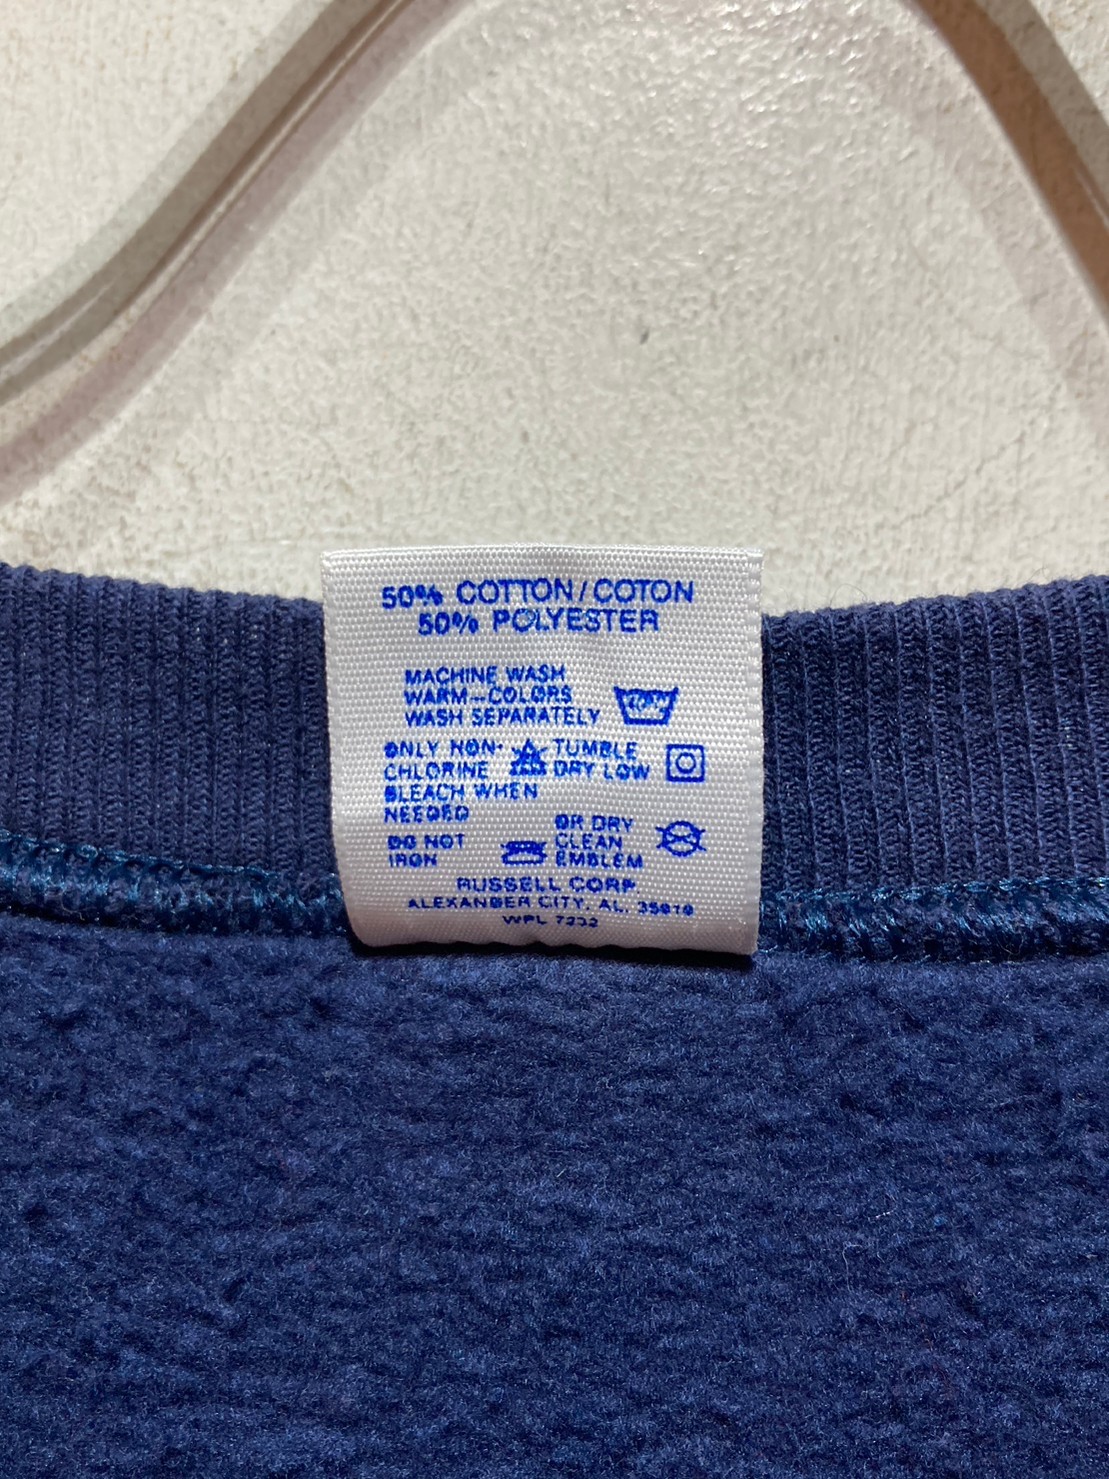 1990’s “PIPPIN” Print Sweat Shirt 「Made